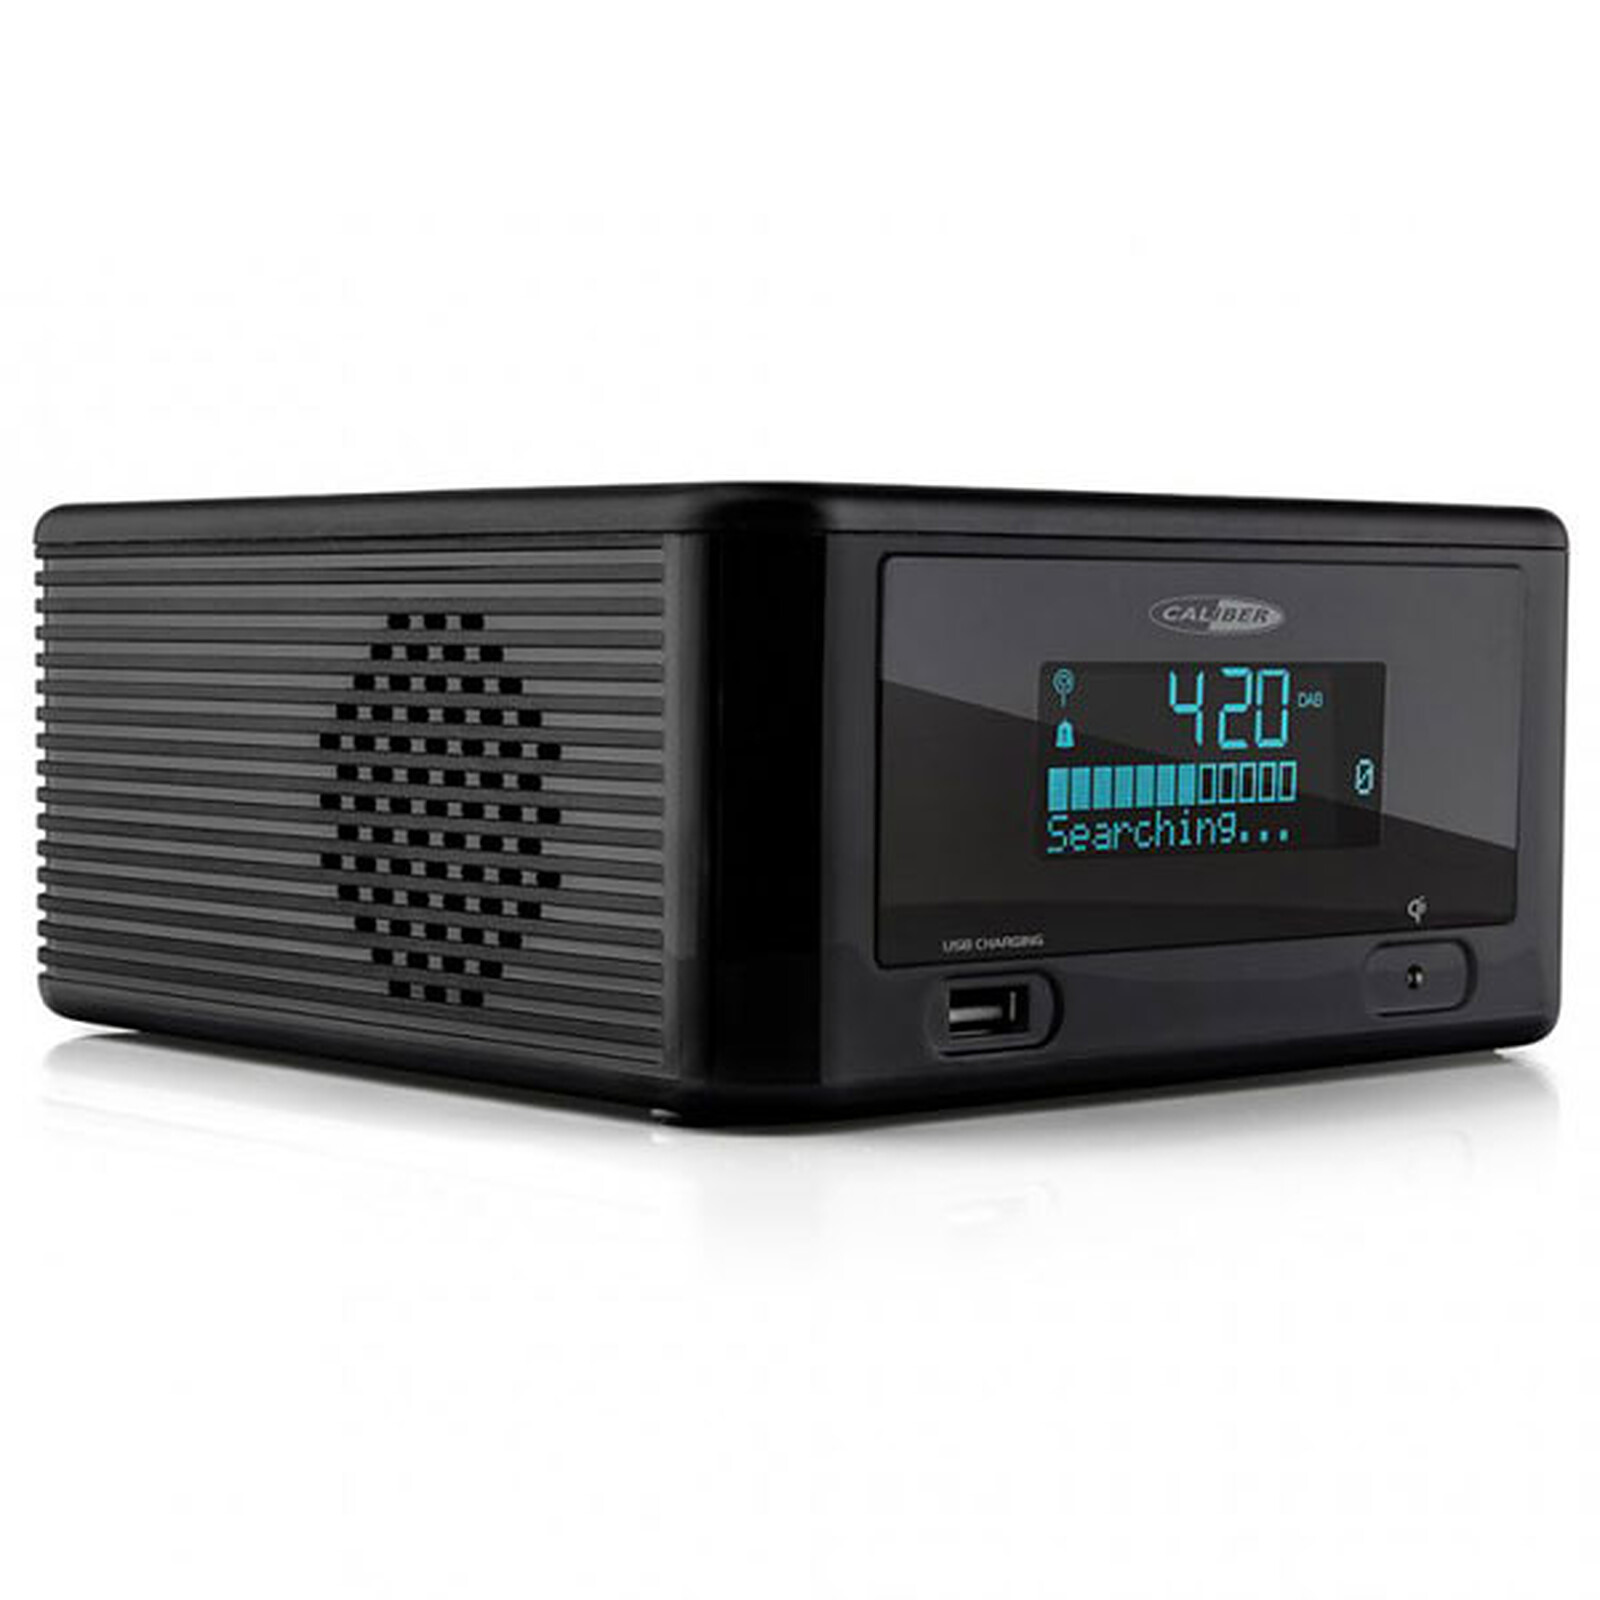 Muse M-380 GB - Radio & radio réveil - Garantie 3 ans LDLC